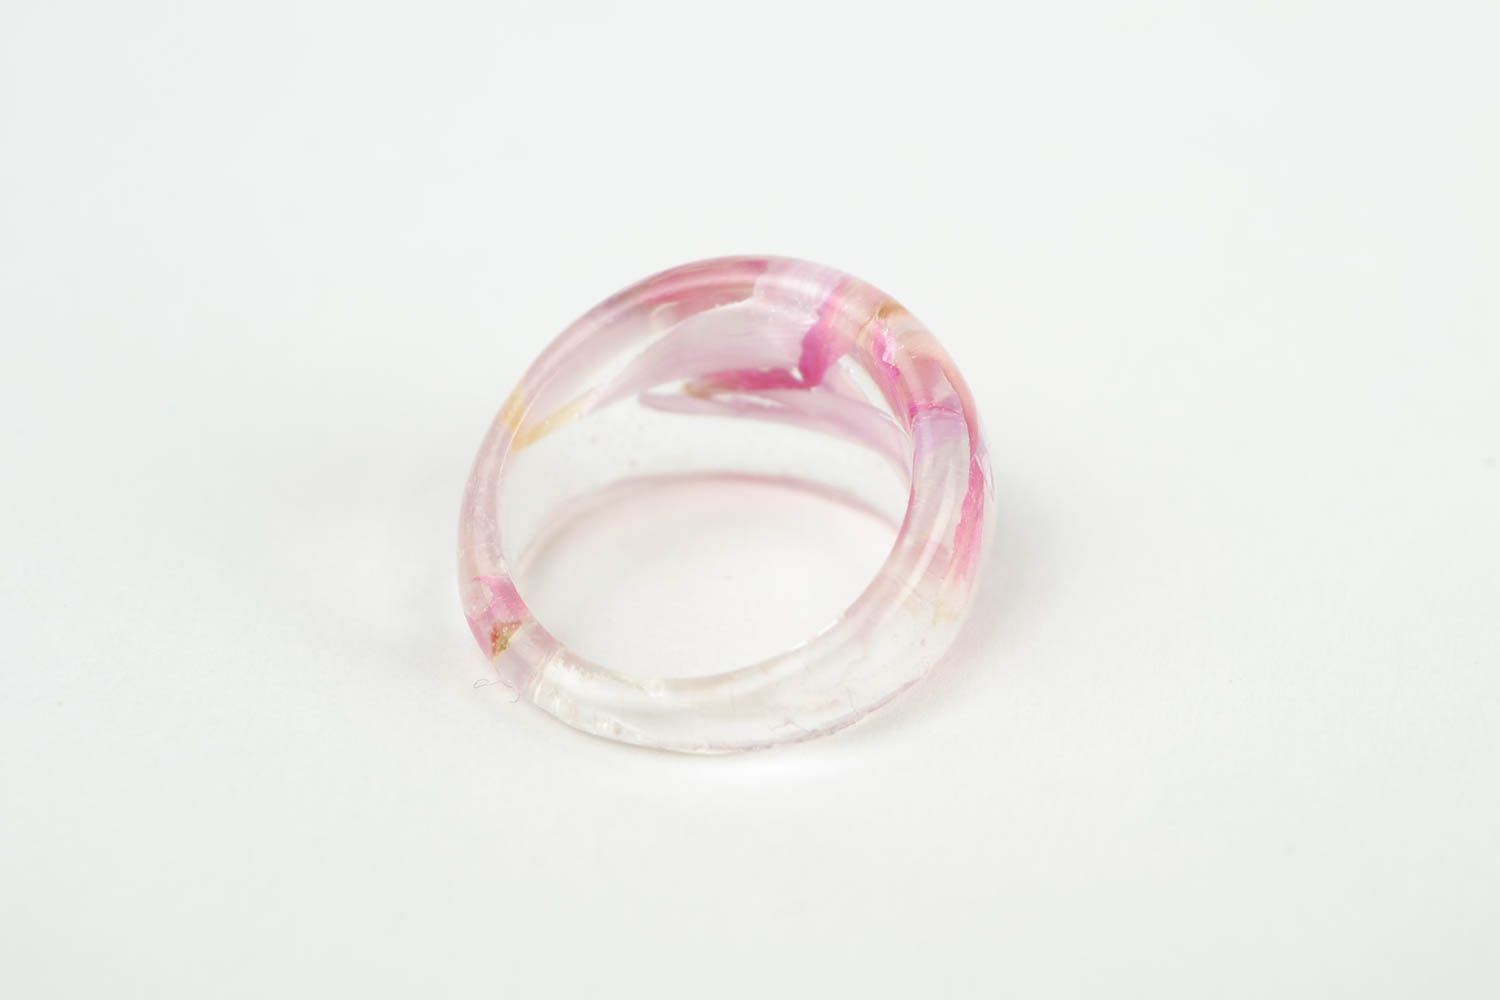 Handmade ring unusual accessories gift ideas designer jewelry for girls photo 4